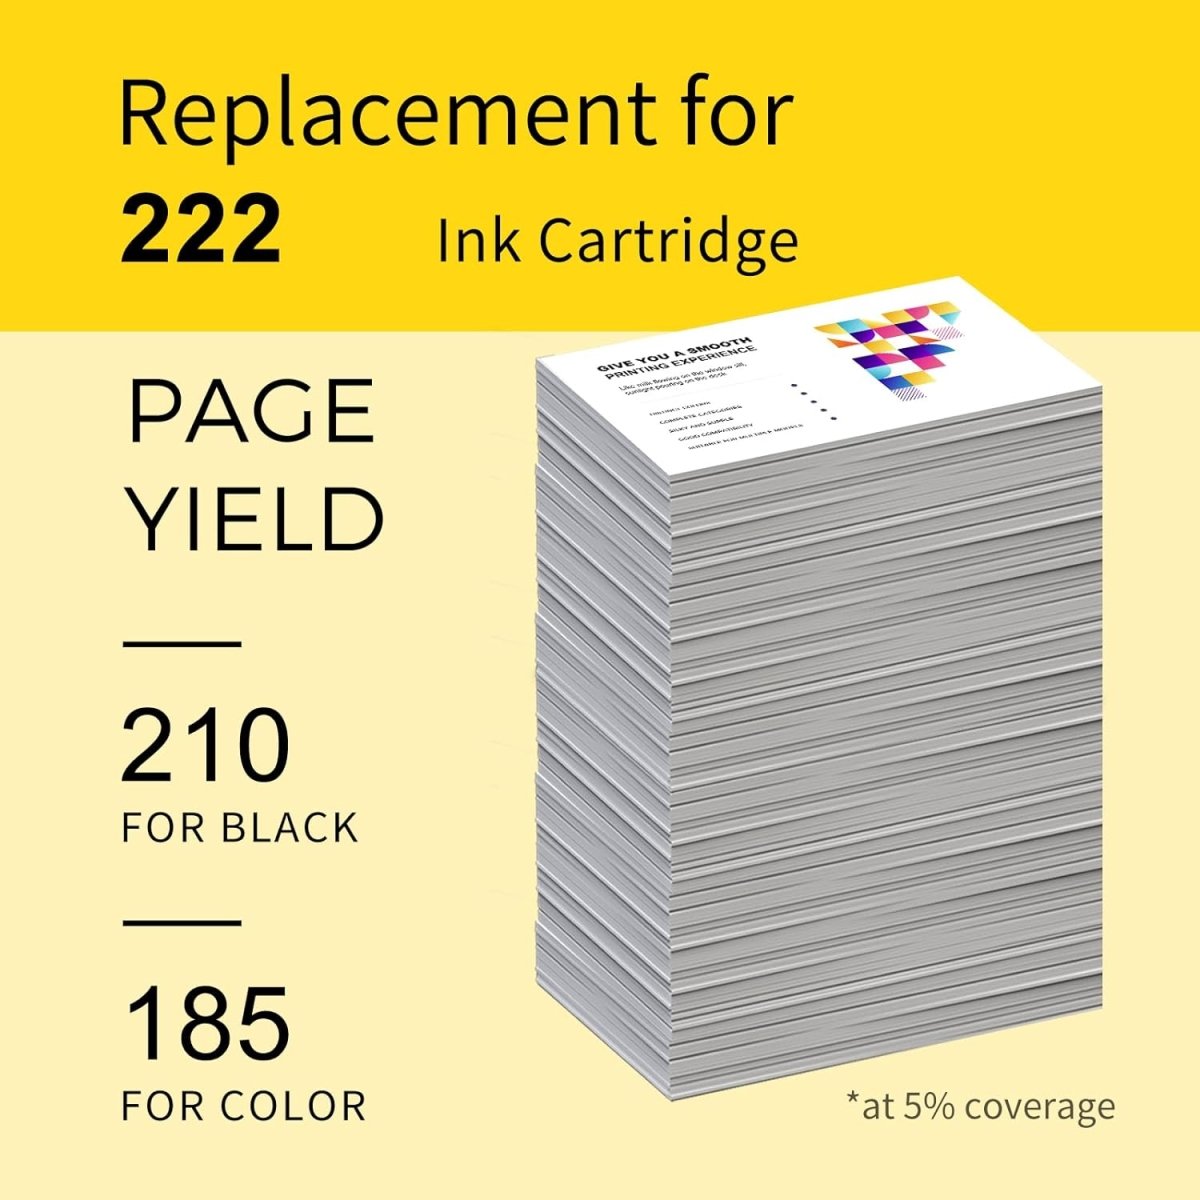 222 Ink Cartridges Remanufactured for Epson Printer (Black, Cyan, Magenta, Yellow, 4-Pack ) - Linford Office:Printer Ink & Toner Cartridge